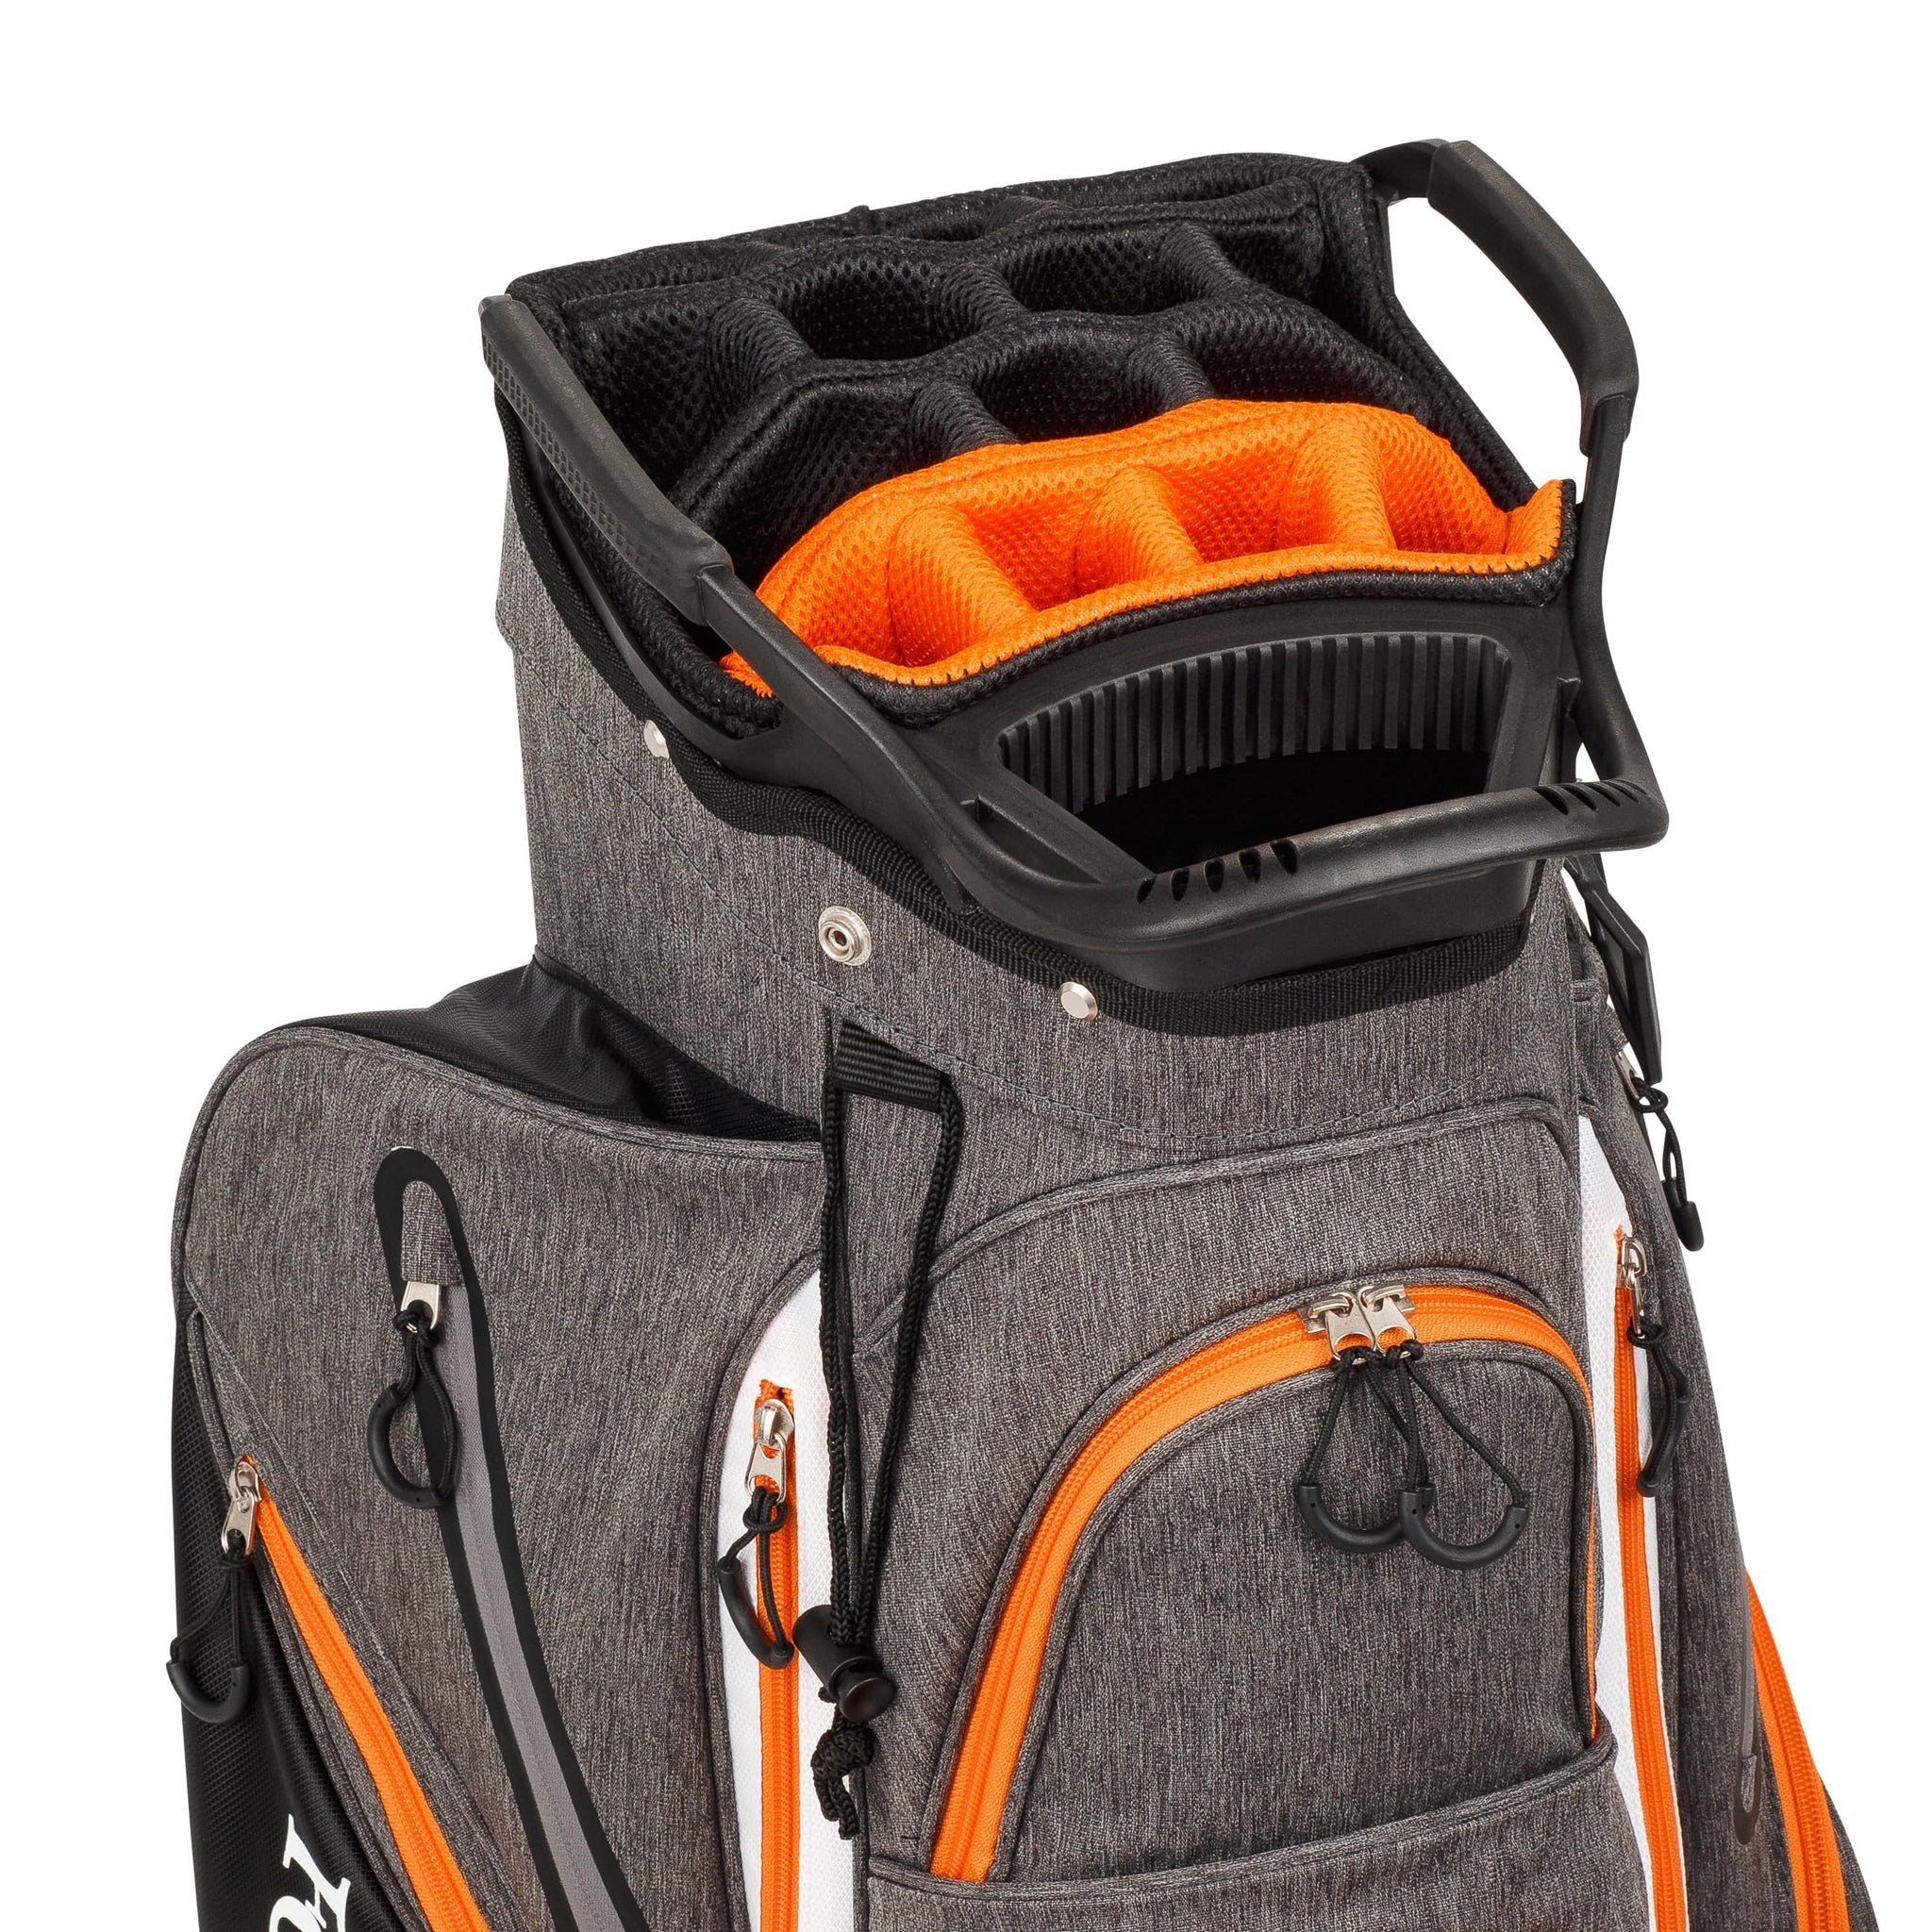 Founders Club Franklin Golf Push Cart Bag -Riding Cart Bag -Full Bag Rain Cover